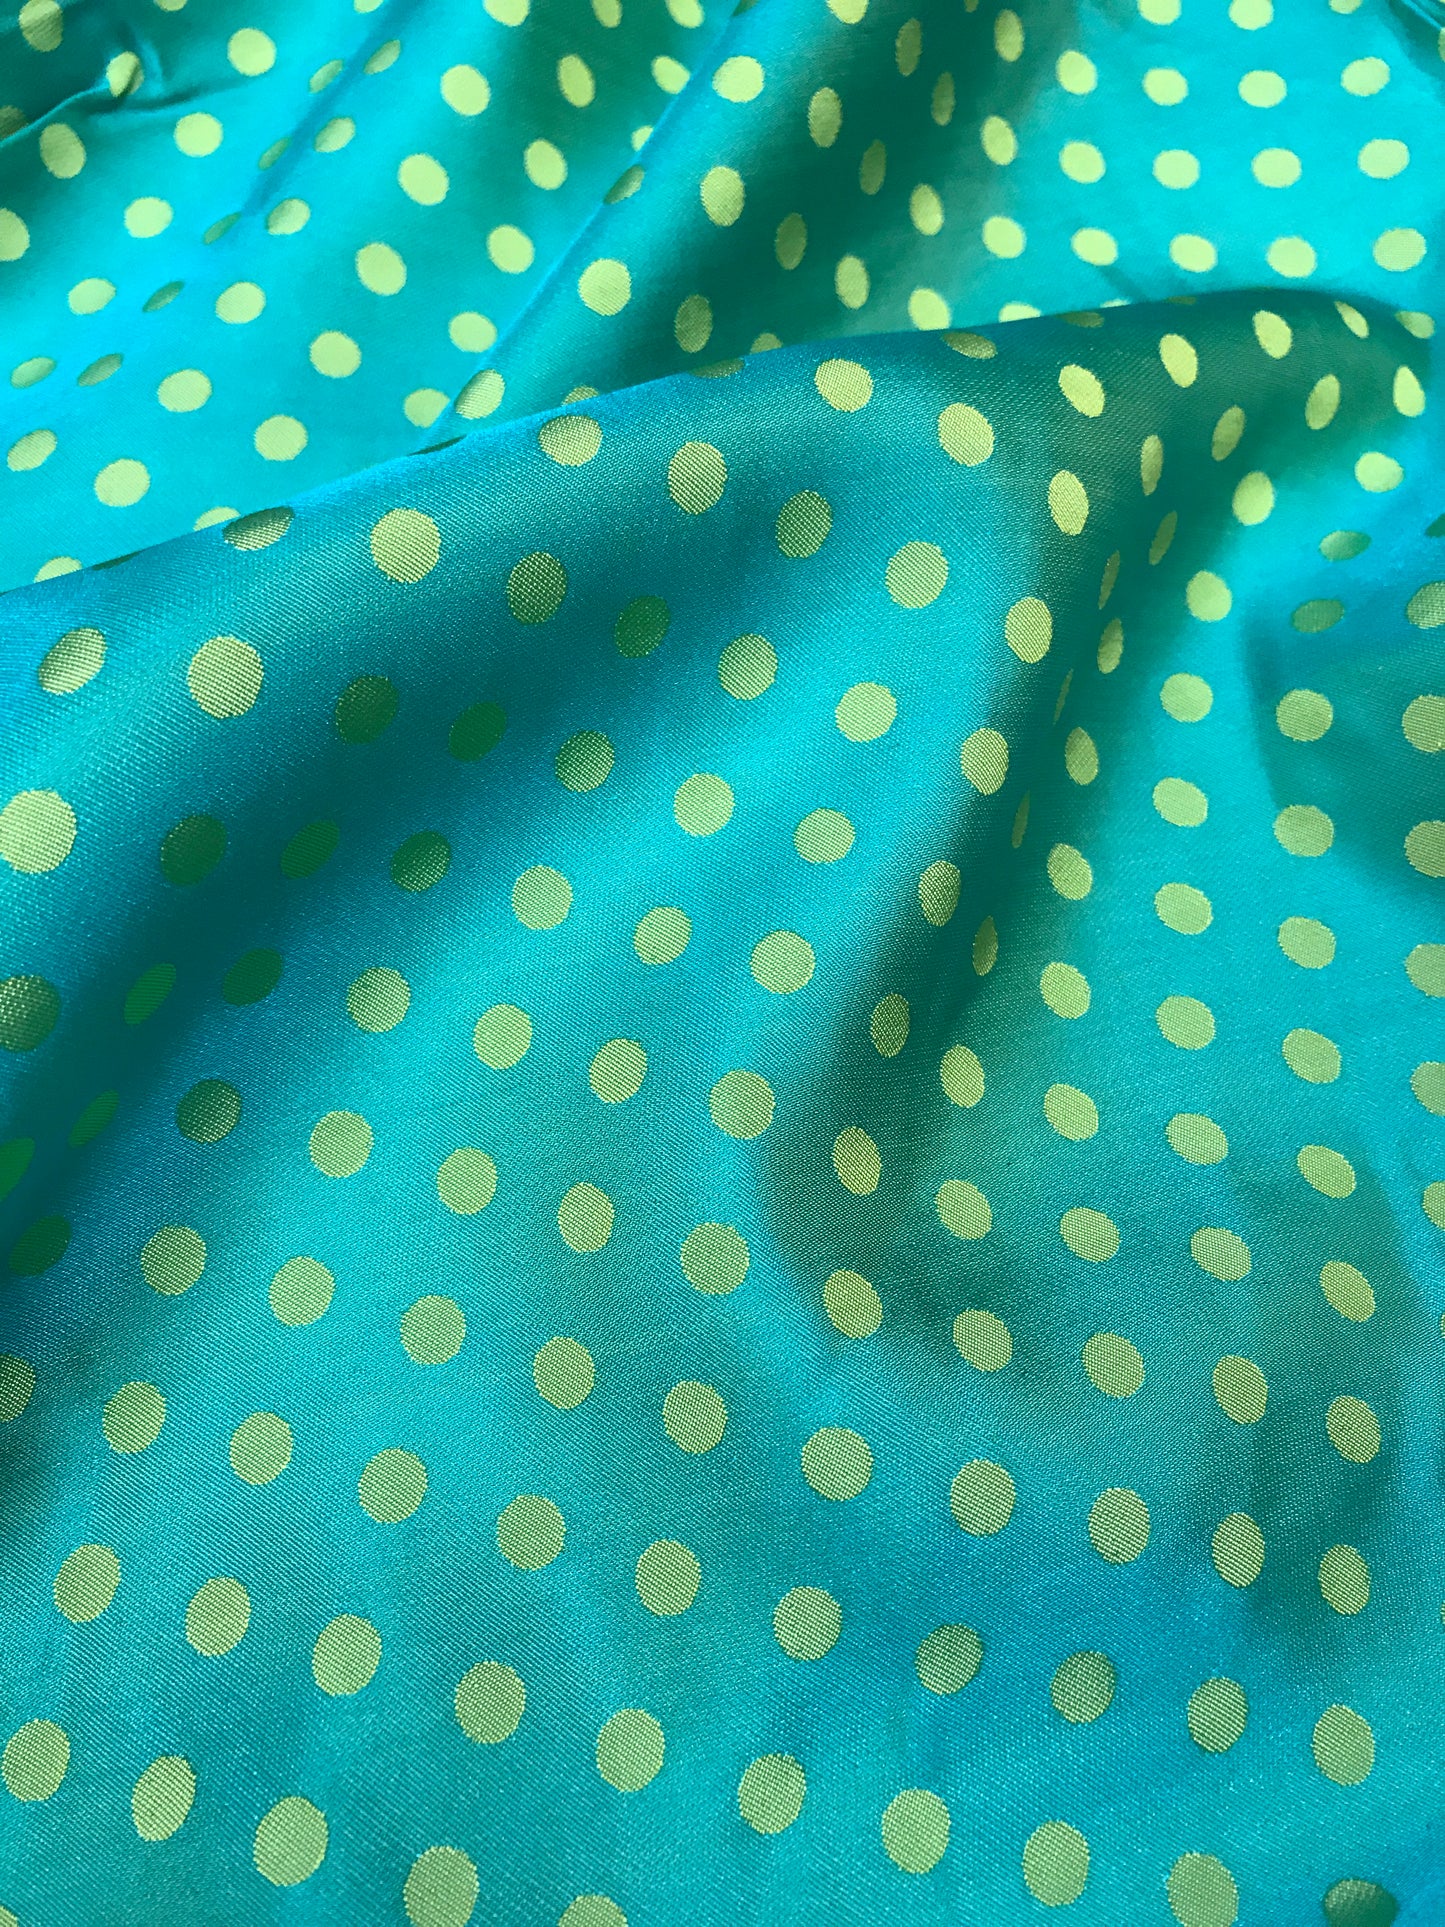 Turquoise Green dot silk - PURE MULBERRY SILK fabric by the yard - Polkadot silk -Luxury Silk - Natural silk - Handmade in VietNam- Silk with Design